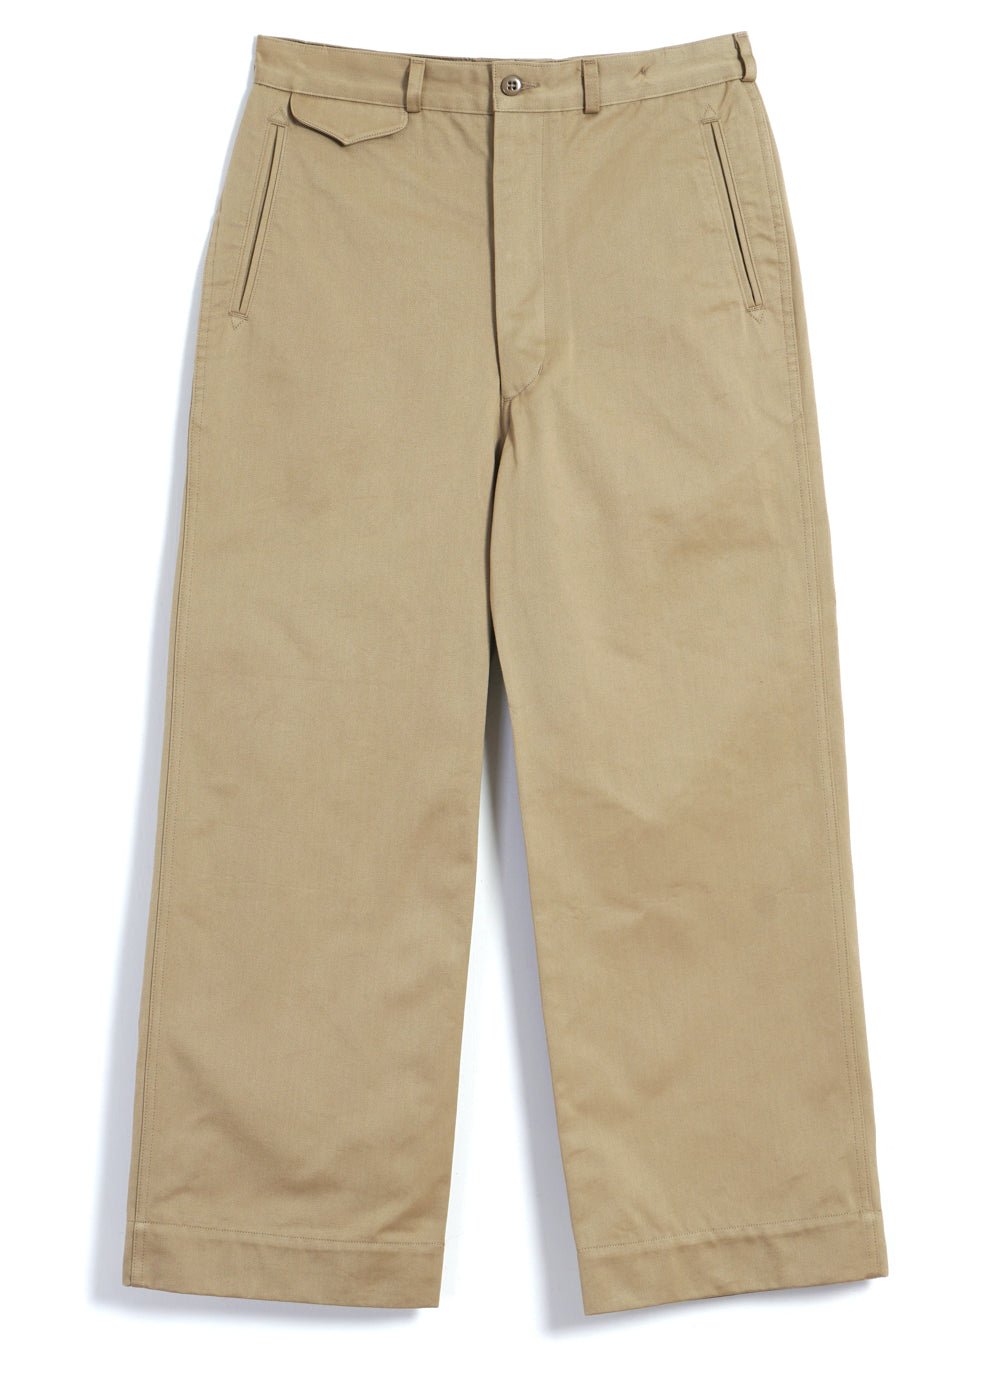 MONITALY - OFFICER CHINO | Wide Fit Chino Pants | Khaki - HANSEN Garments